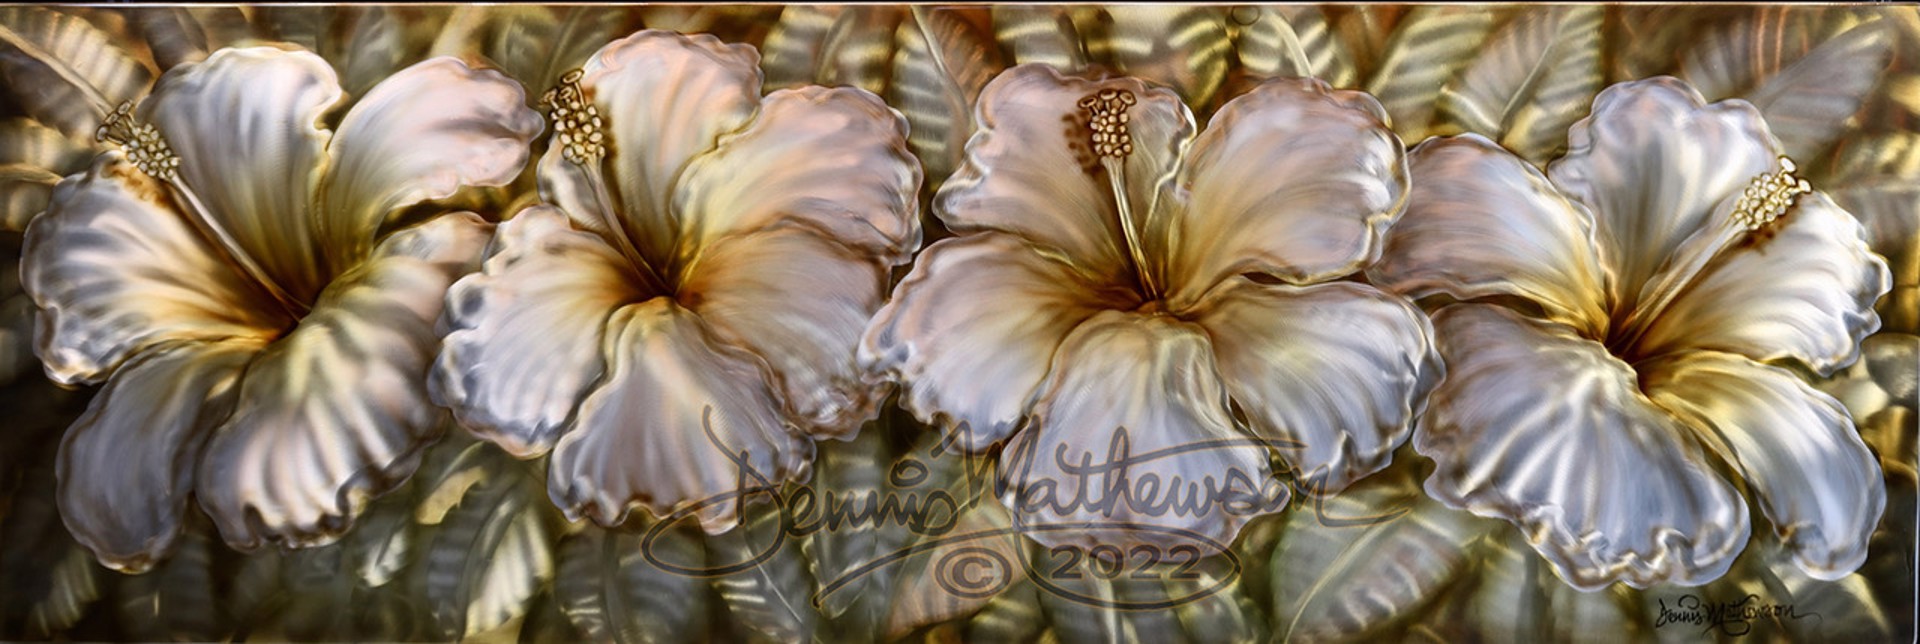 Hibiscus Maui Morning by Dennis Mathewson